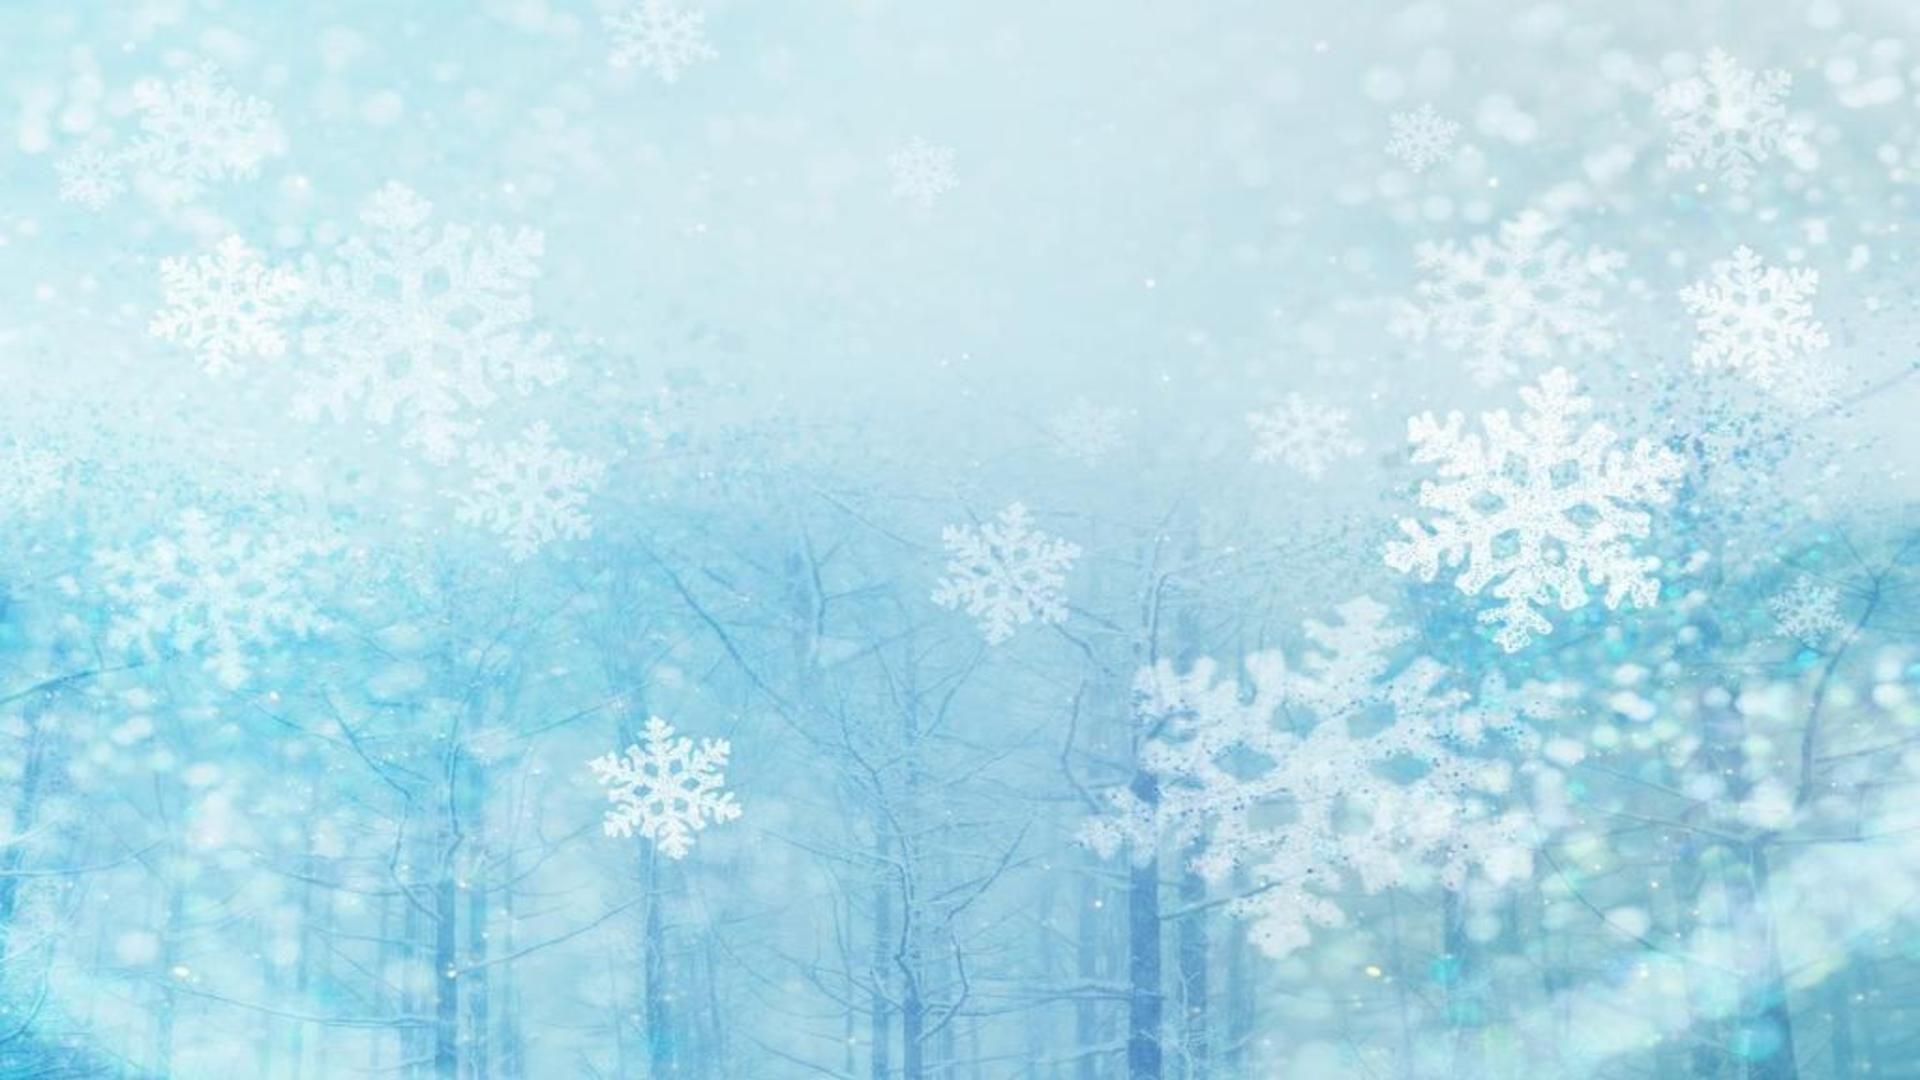 Romantic snow flakes Christmas baubles free desktop background